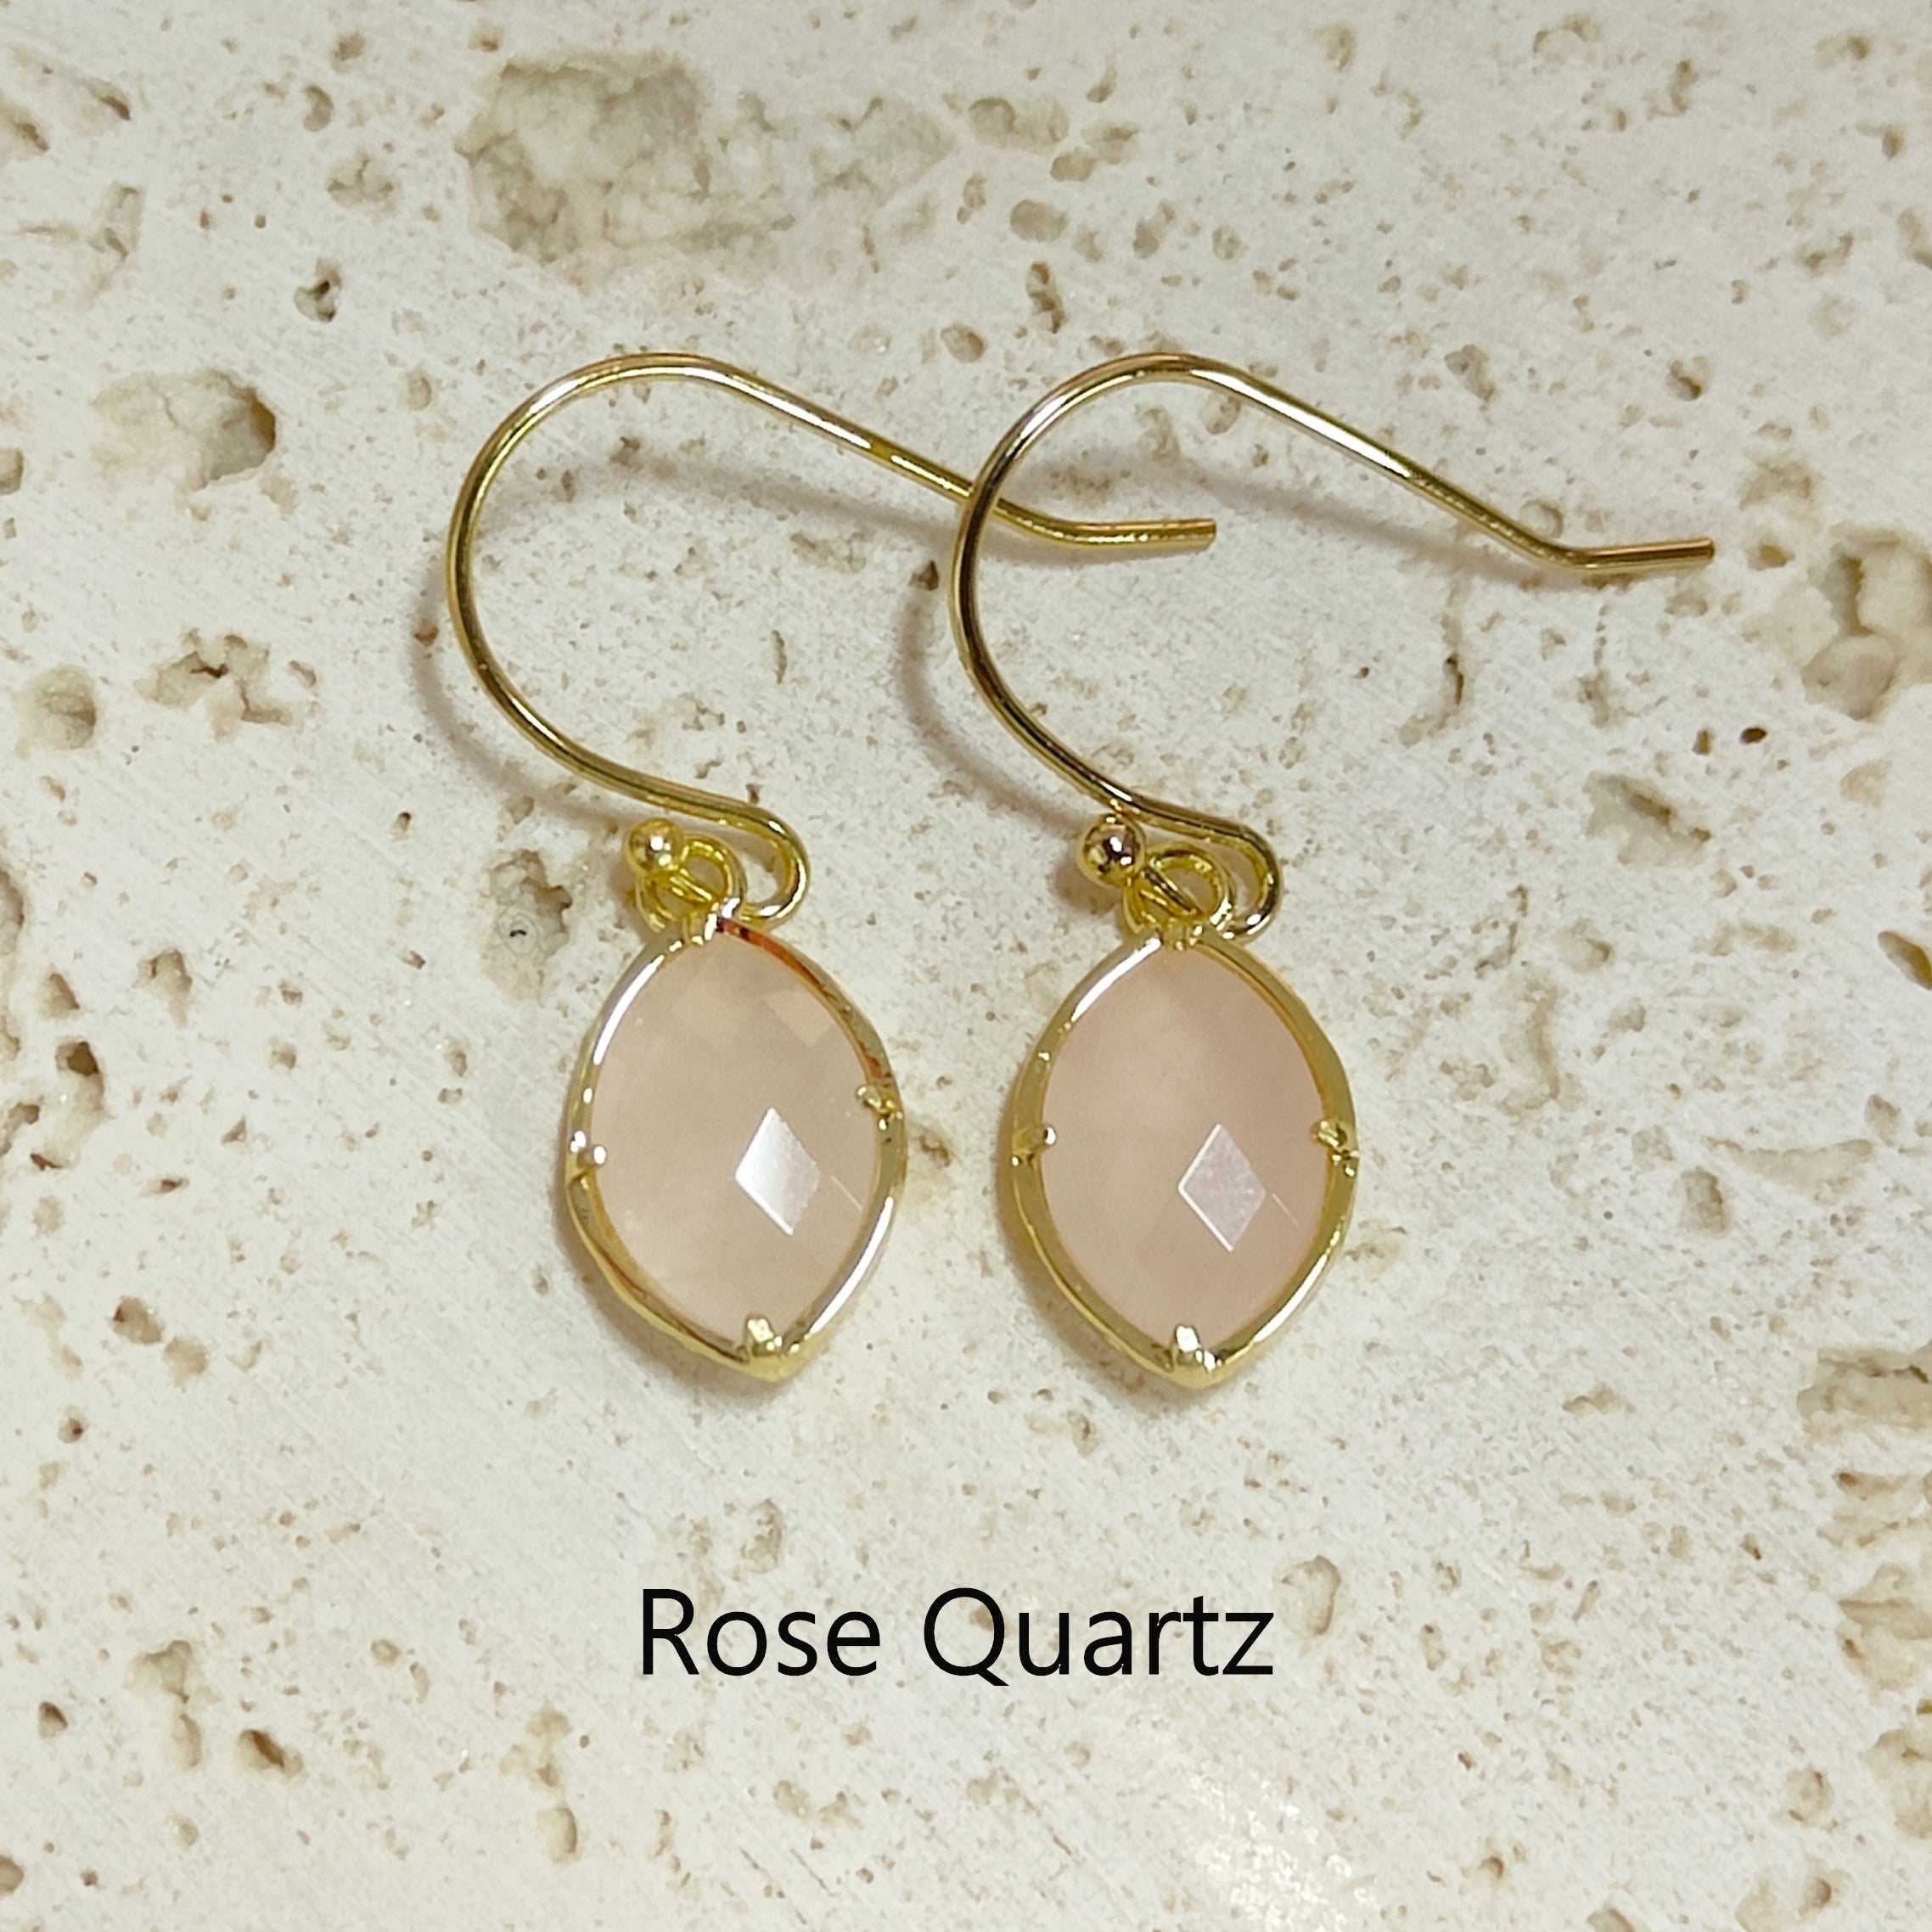 Wholesale Gold Plated Marquise Gemstone Earrings, Healing Crystals Stone Earrings Jewelry AL573 rose quartz earrings